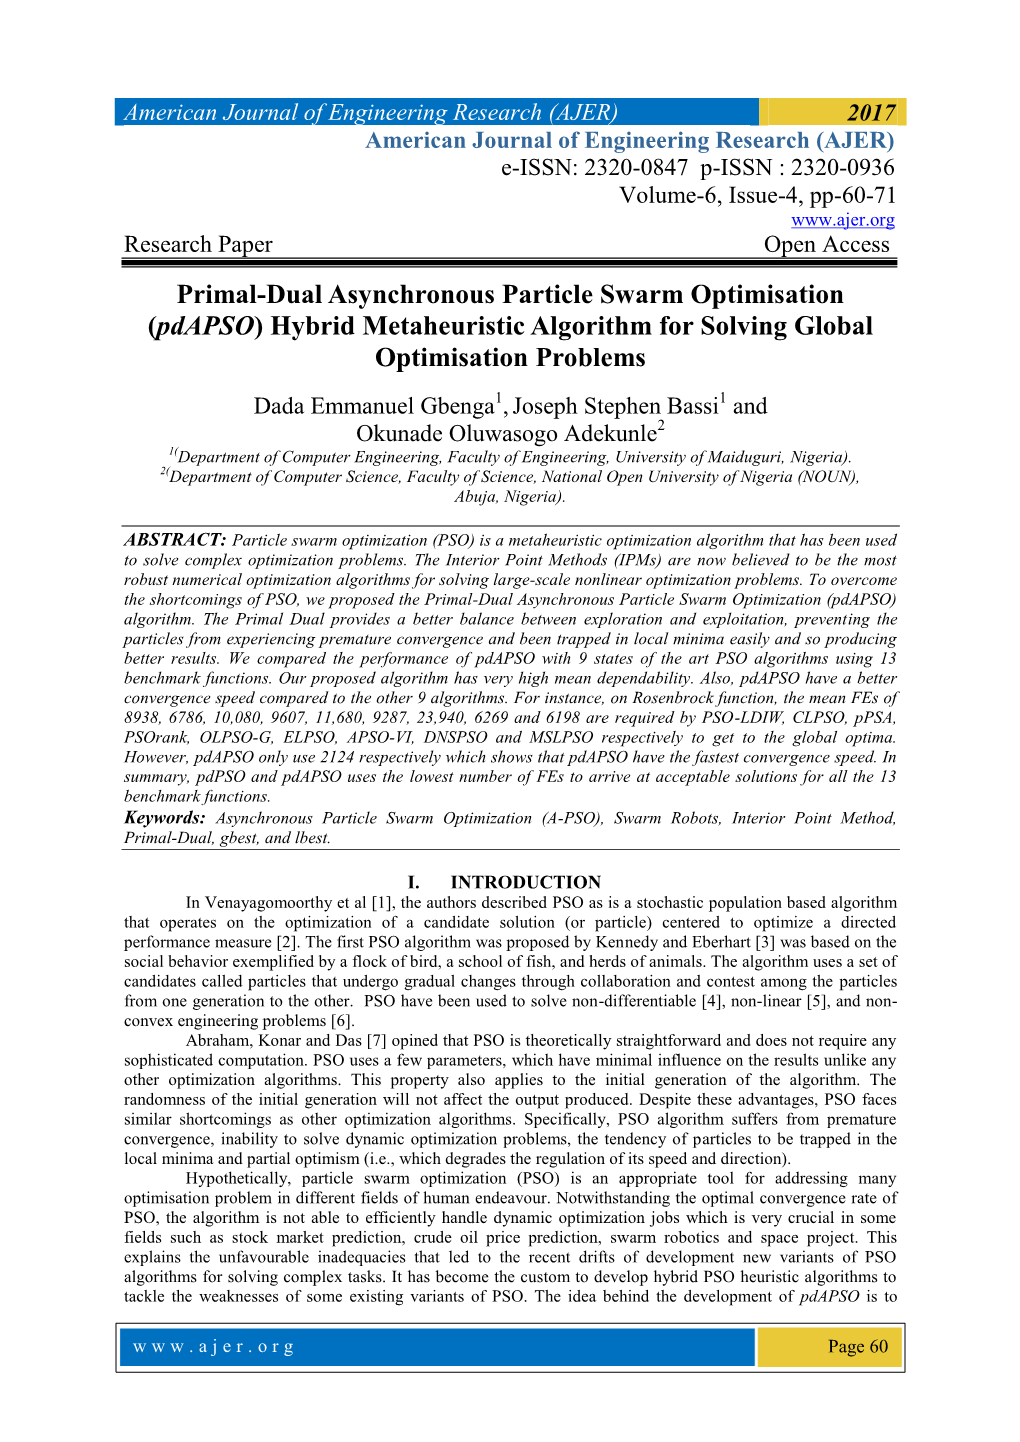 Primal-Dual Asynchronous Particle Swarm Optimisation (Pdapso) Hybrid Metaheuristic Algorithm for Solving Global Optimisation Problems